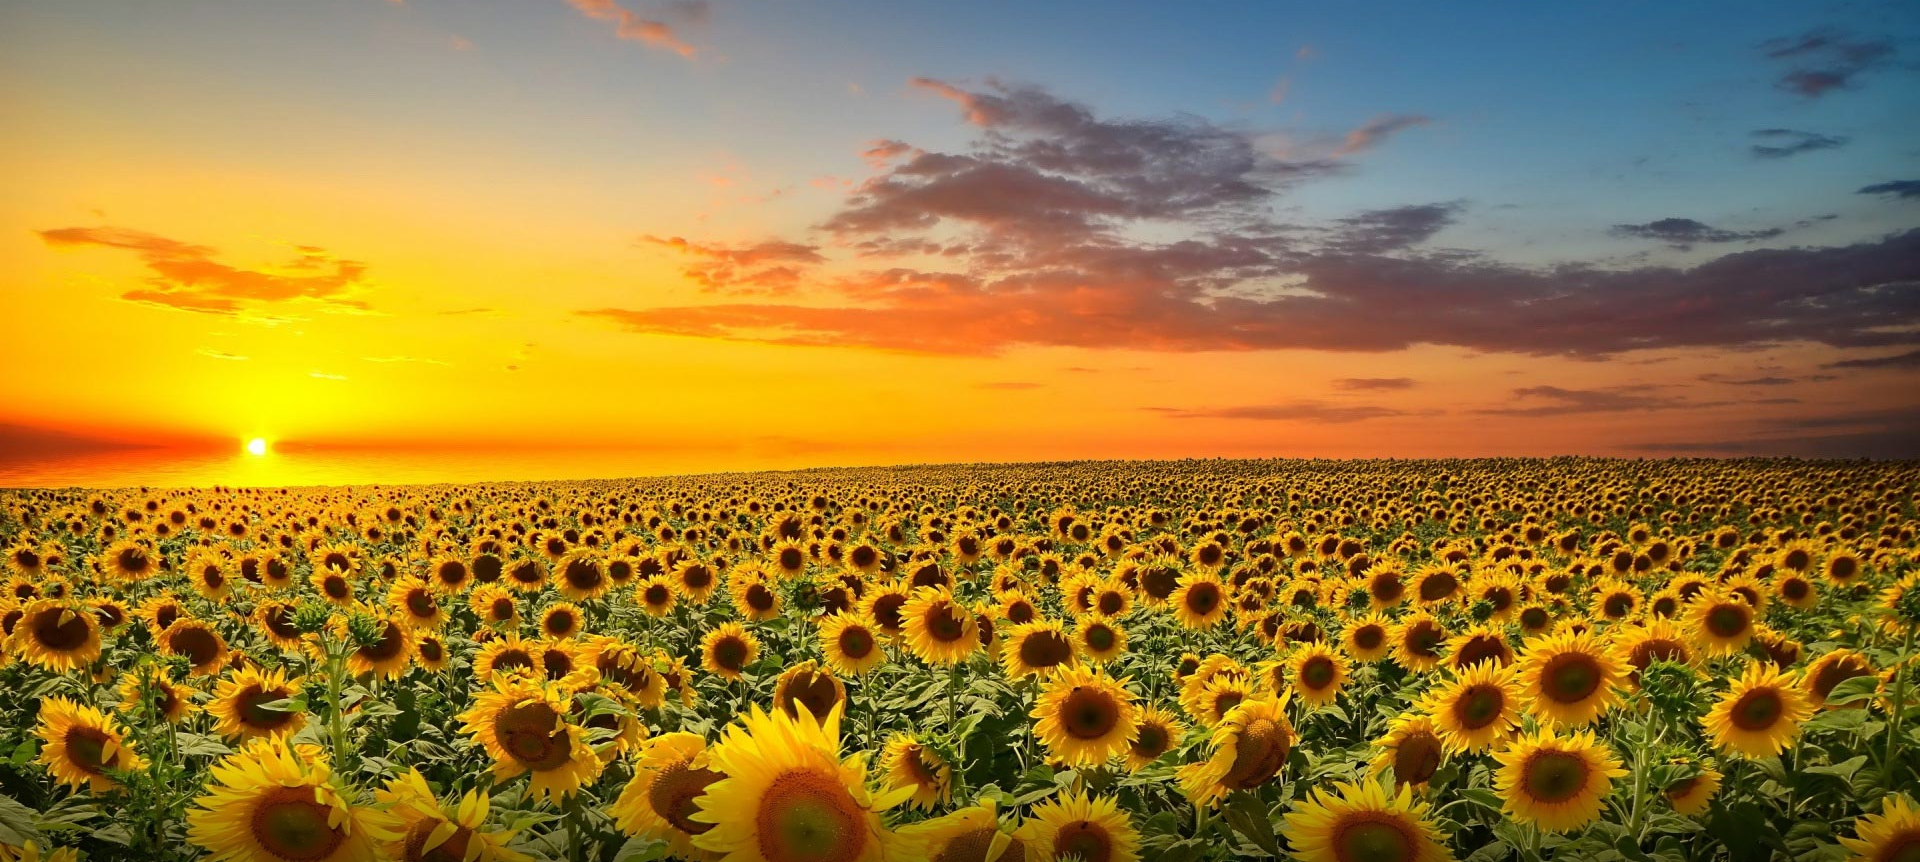 General 1920x862 Sun sunflowers field landscape flowers sky sunlight yellow flowers colorful Agro (Plants)